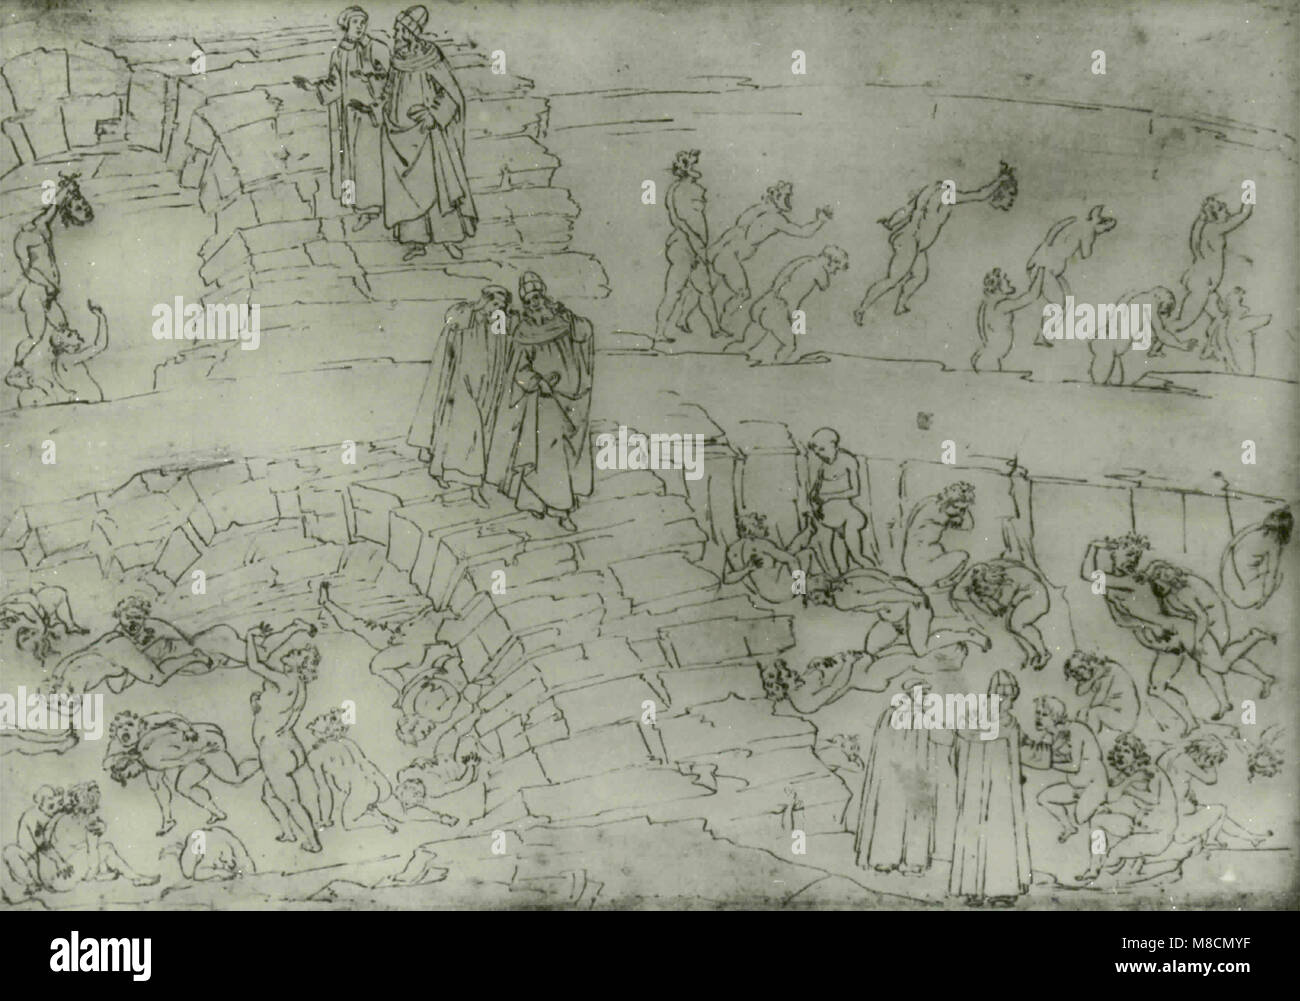 Canto XXIX (29), Dante's Inferno illustration by Botticelli Stock Photo